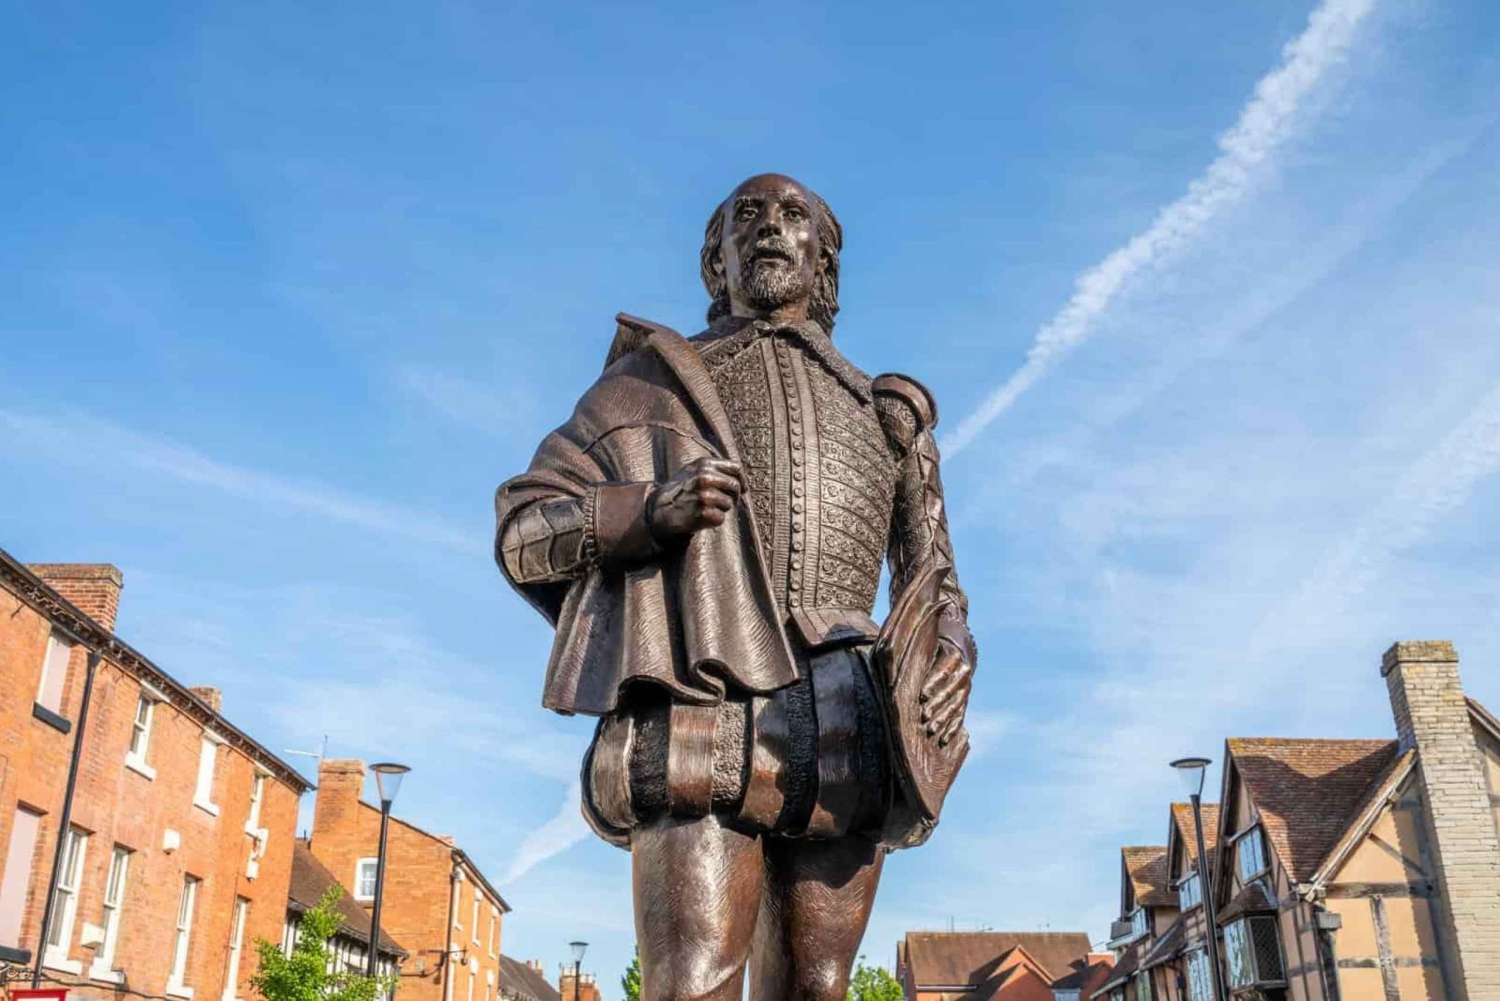 Starford-Upon-Avon: Shakespeare's Birthplace Historical Tour